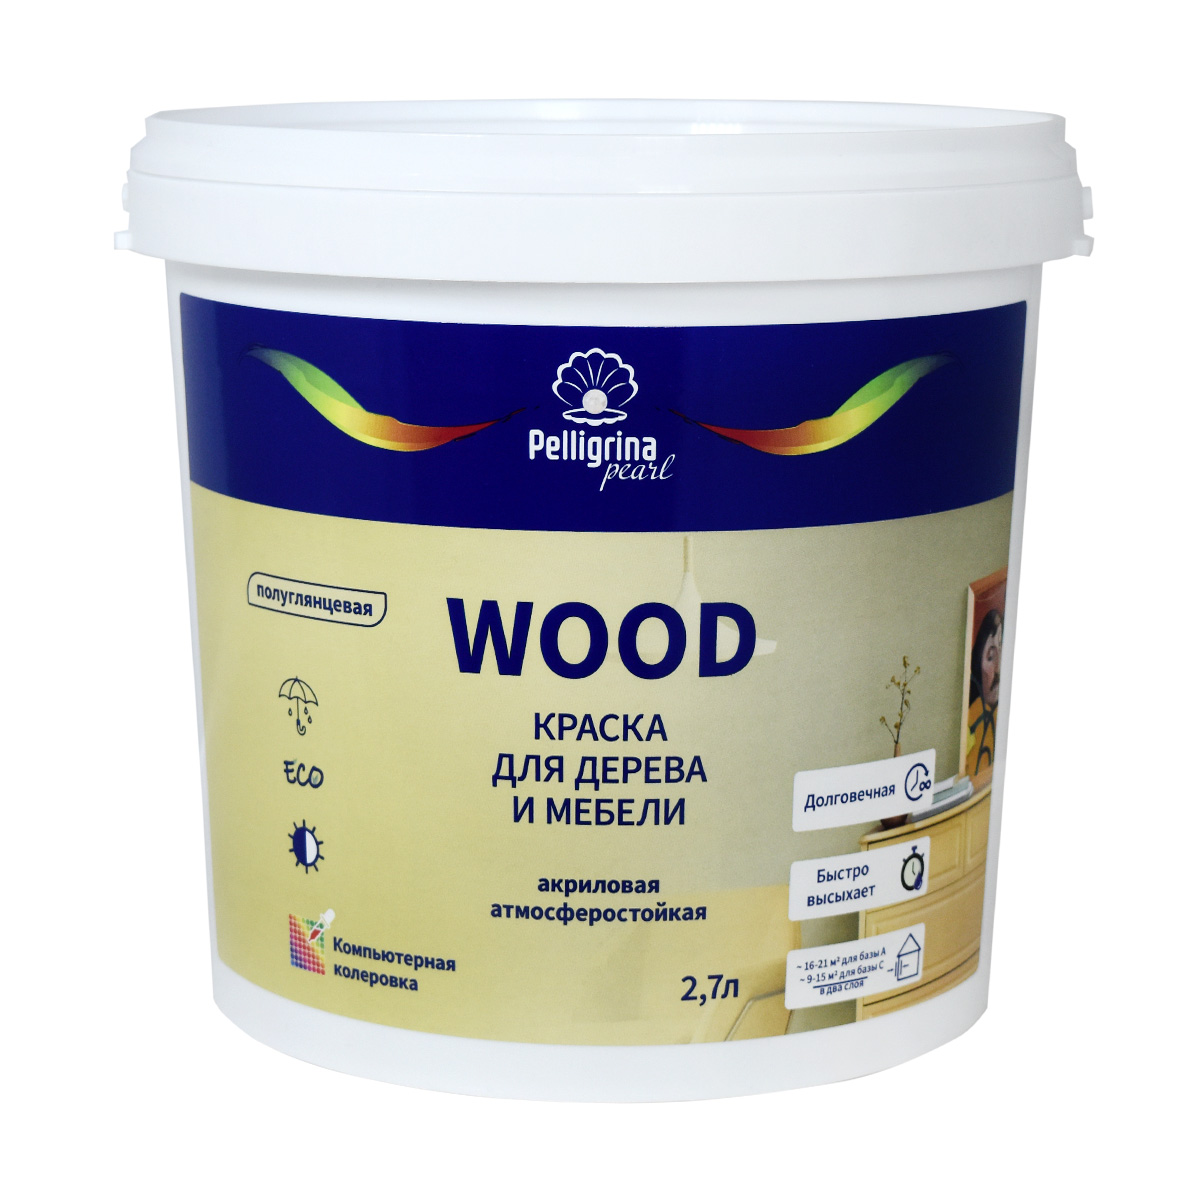 Краска для дерева и мебели Pelligrina Pearl Wood, акриловая, база С, бесцветная, 2,7 л краска olsta wood paint для дерева a 2 7 л